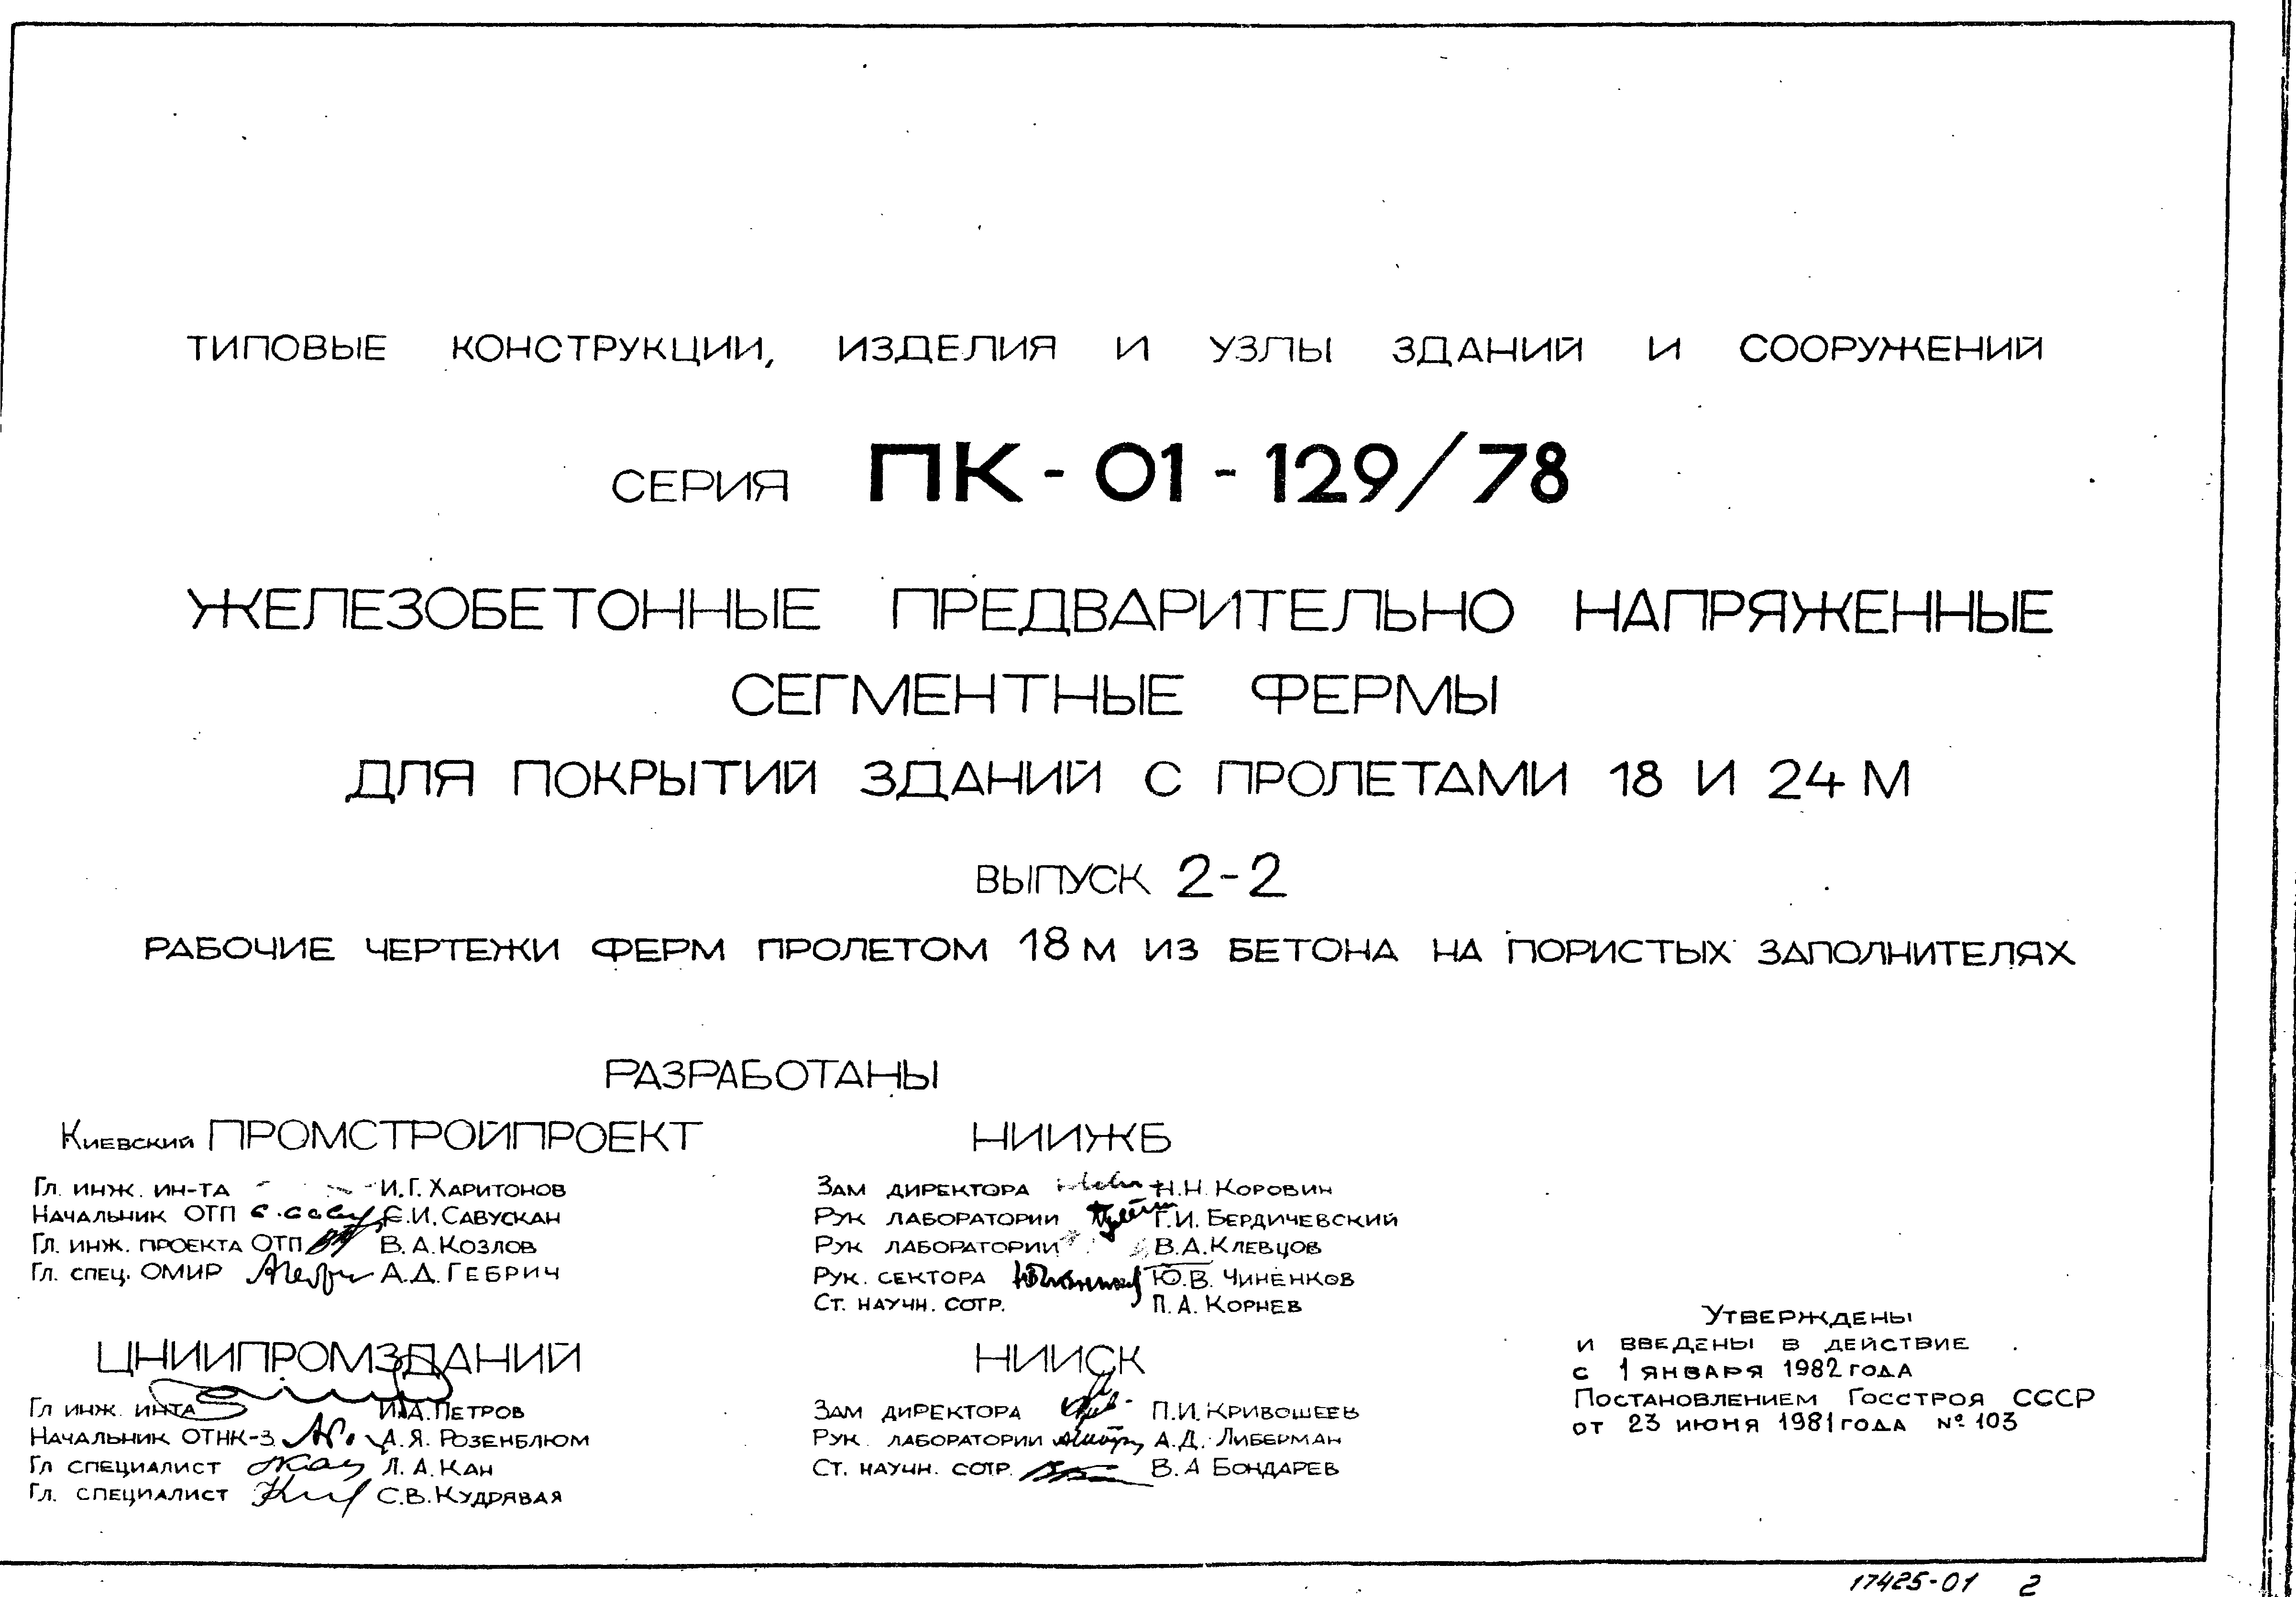 Серия ПК-01-129/78